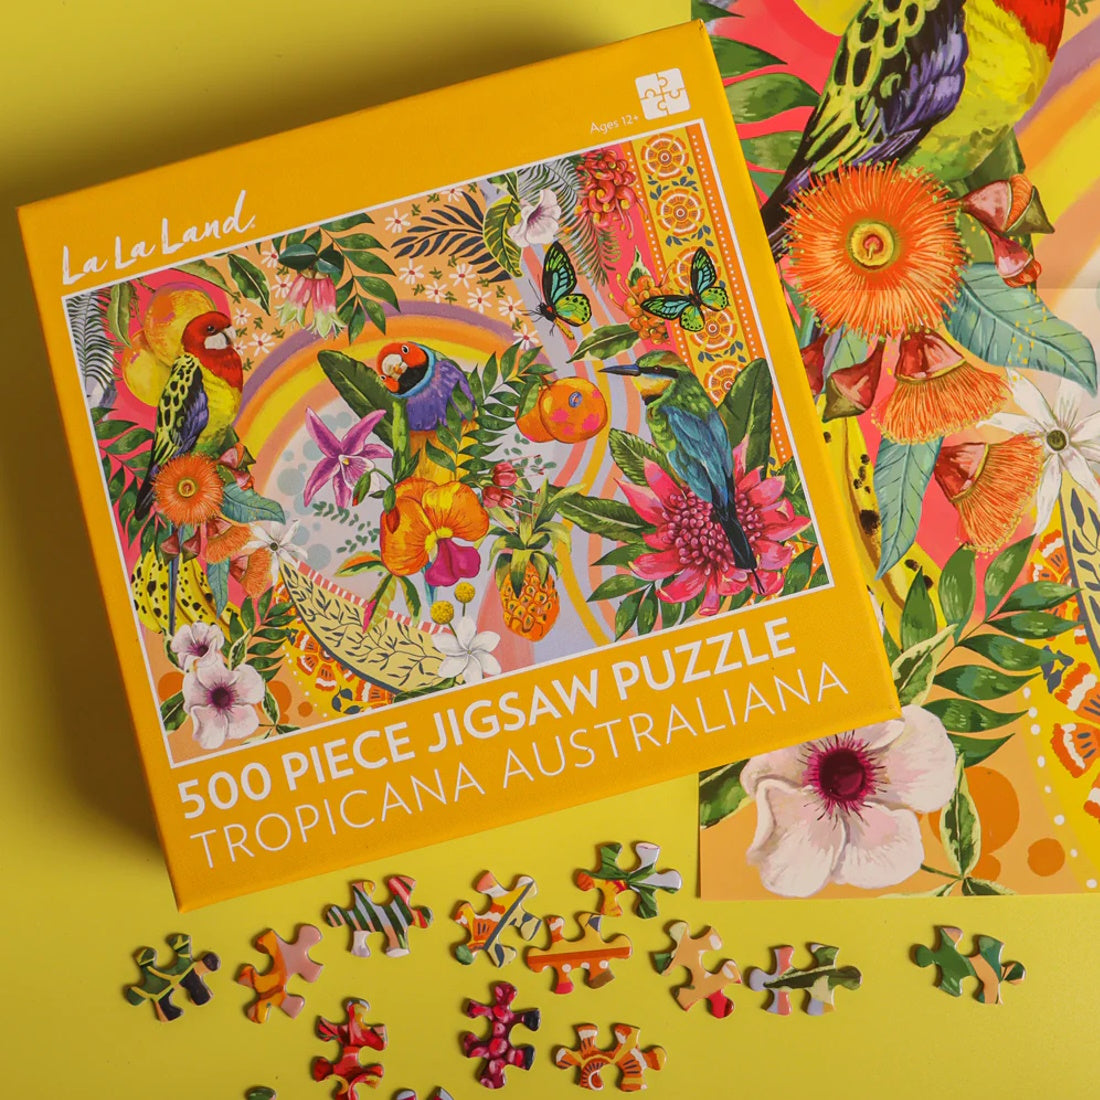 La La Land Tropicana Australiana - 500 Piece Jigsaw Puzzle